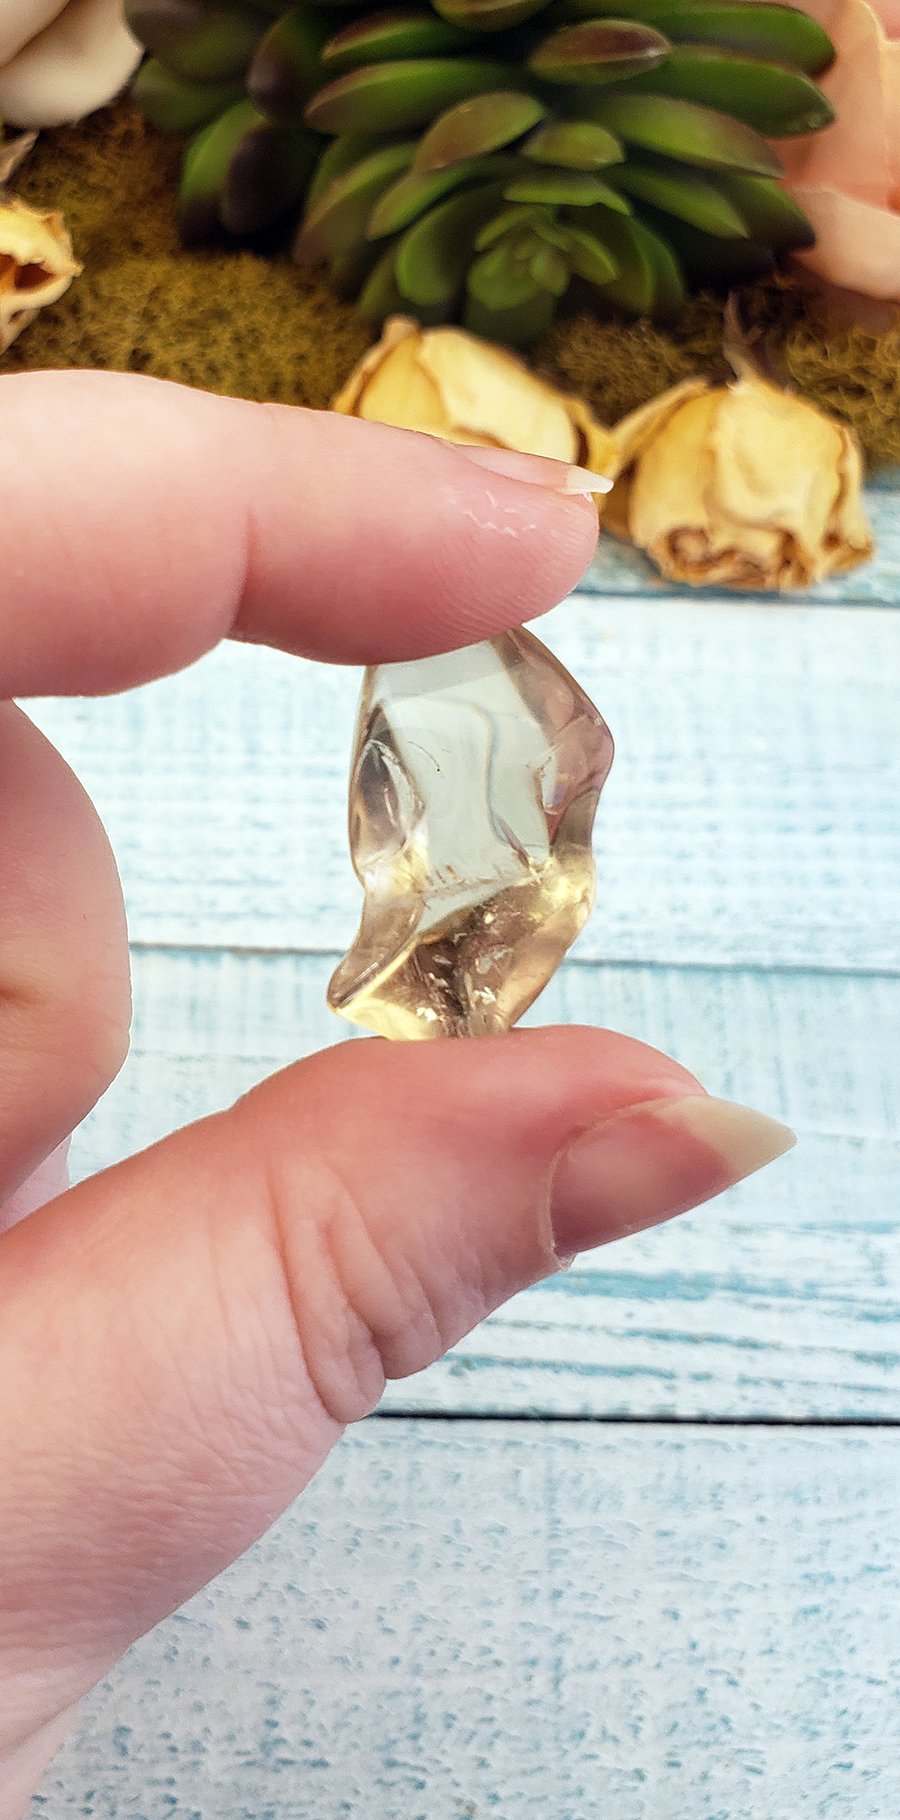 Pale Smoky Quartz Tumbled Gemstone - Small Freeform One Stone in Hand